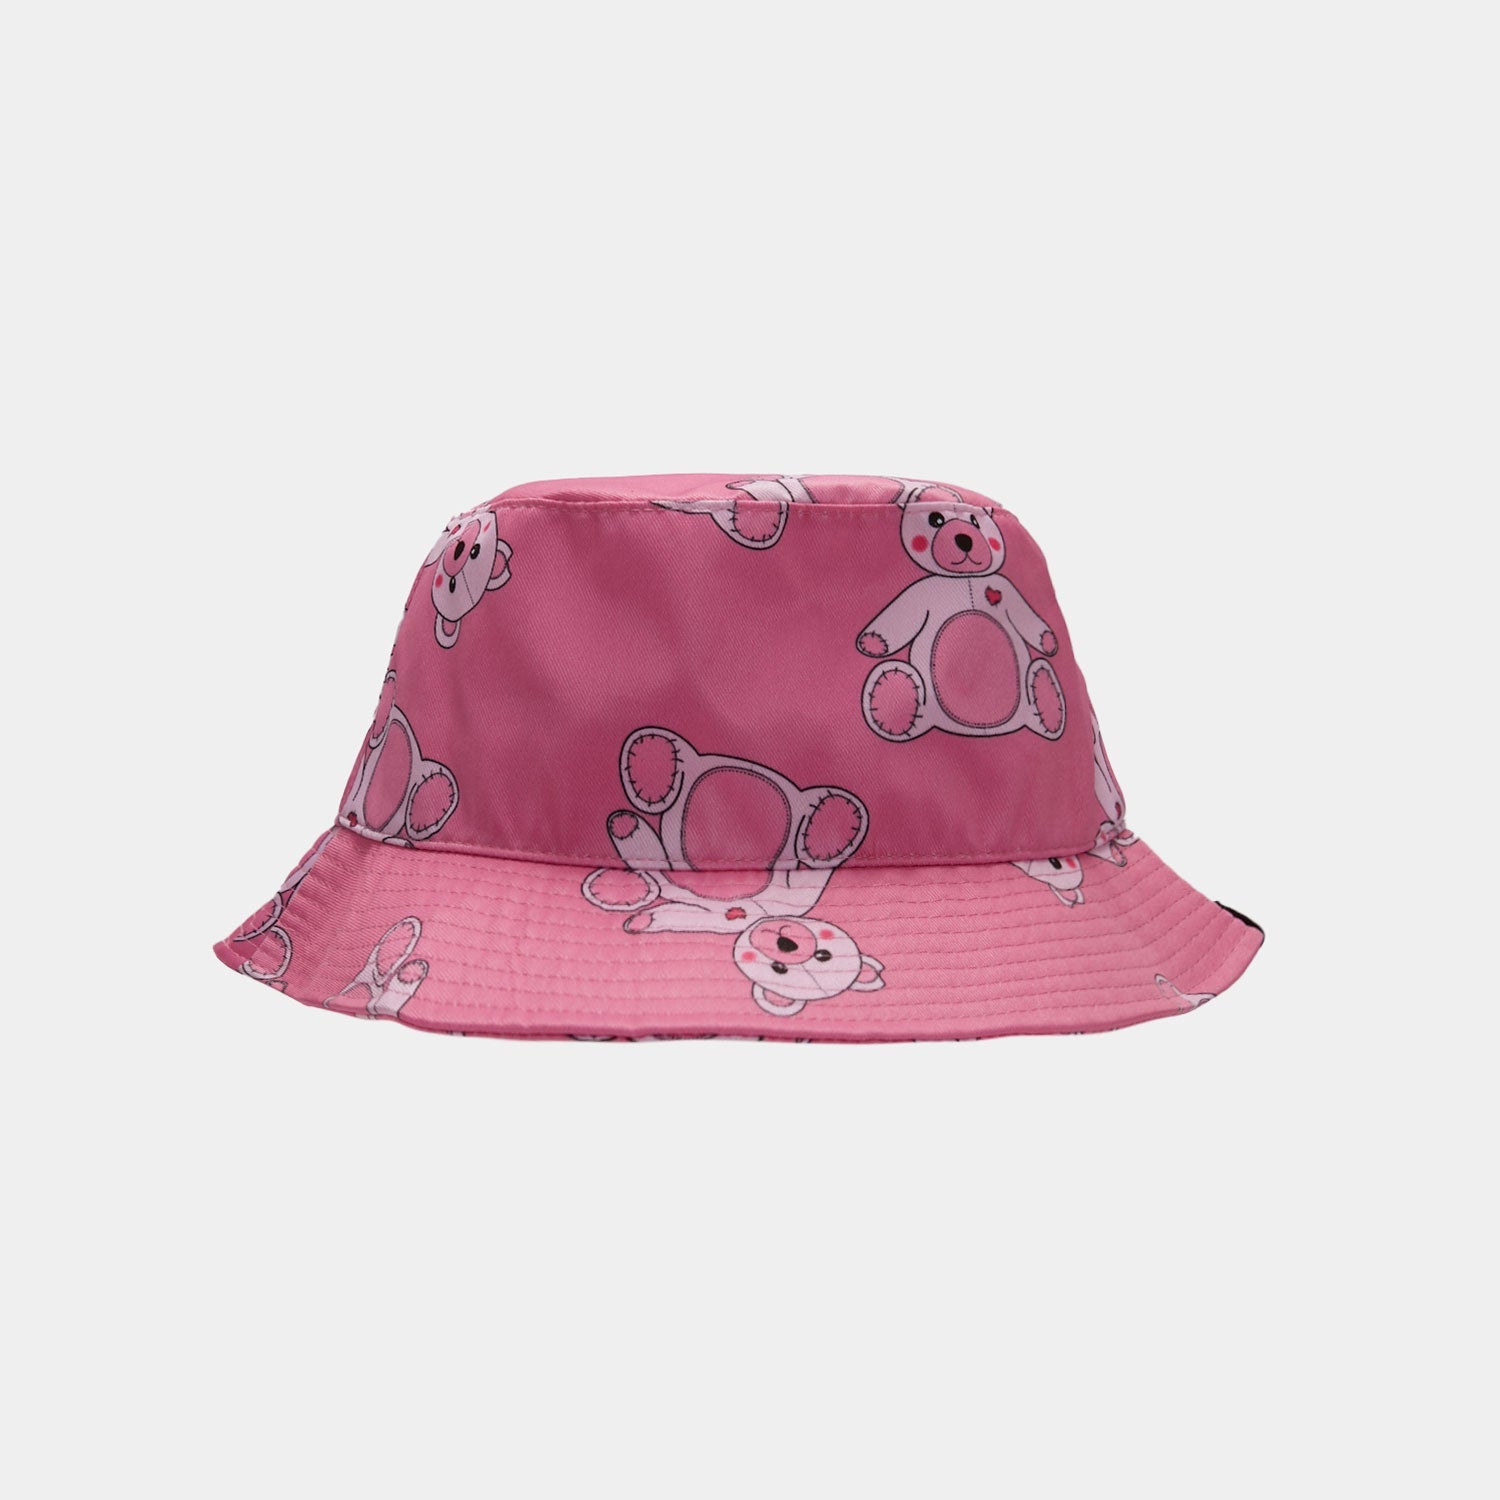 Lotso Love Pink Bonnet Hat - Accessories - KOI Footwear - Pink - Front View